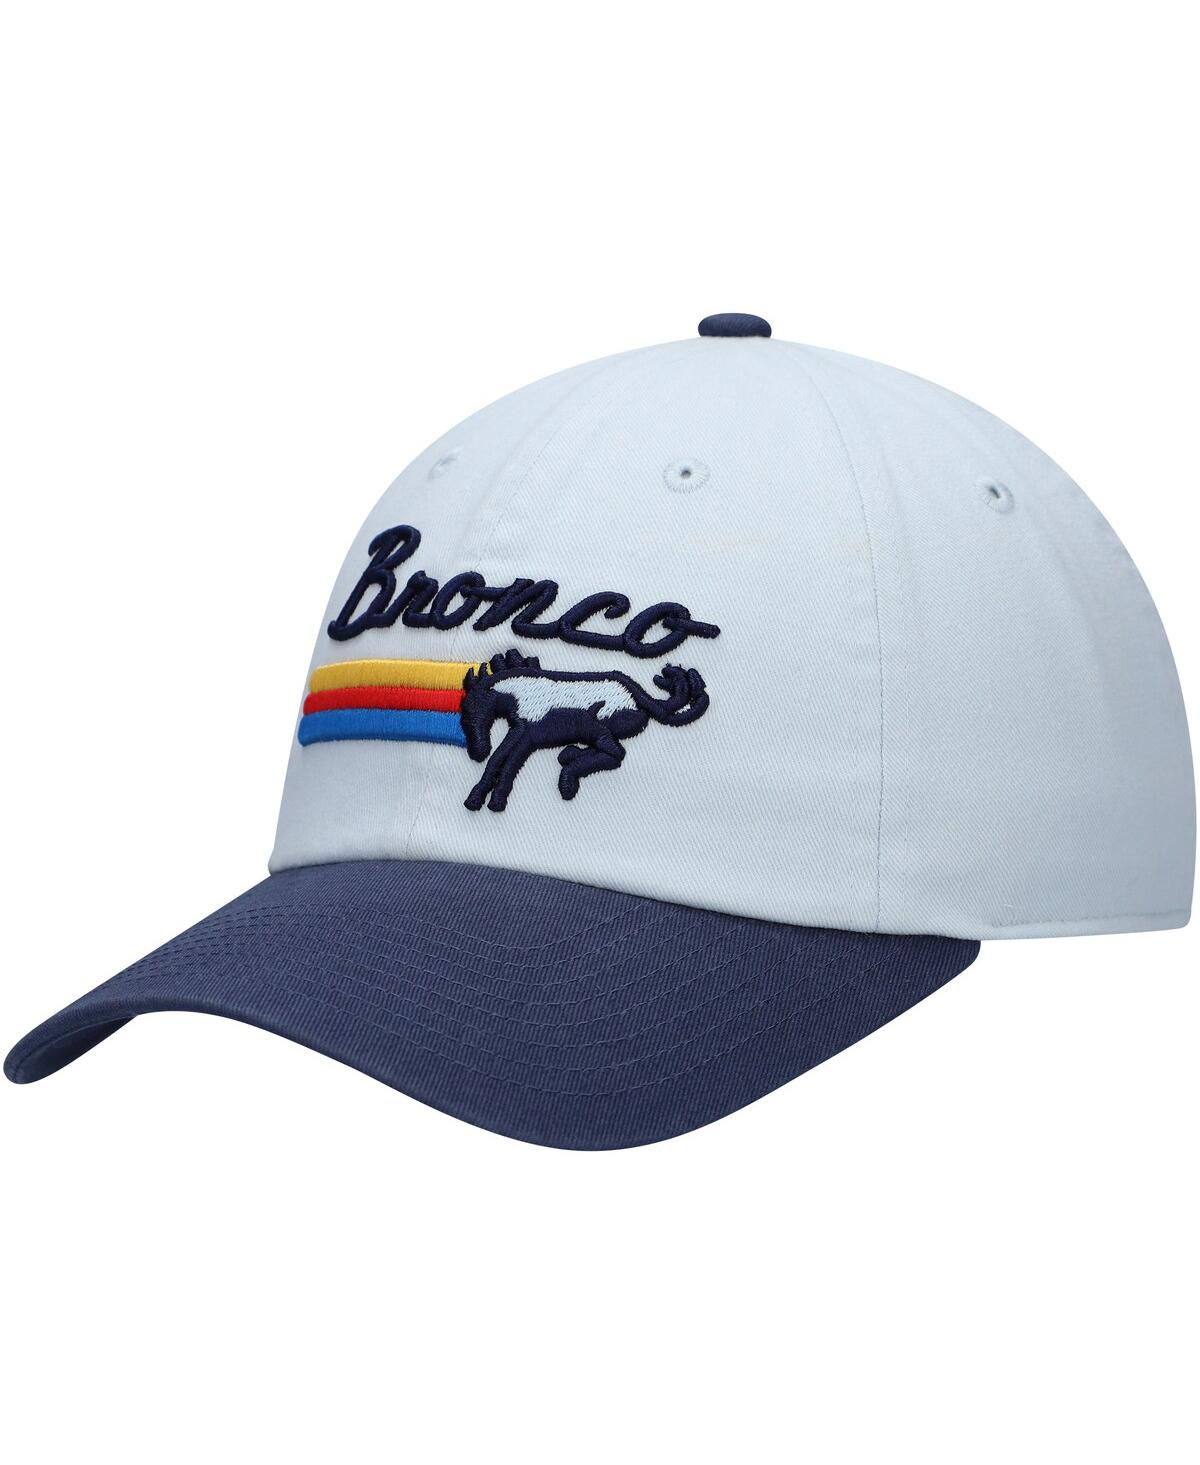 Unisex Blue Ford Bronco Ballpark Adjustable Hat - Blue Navy